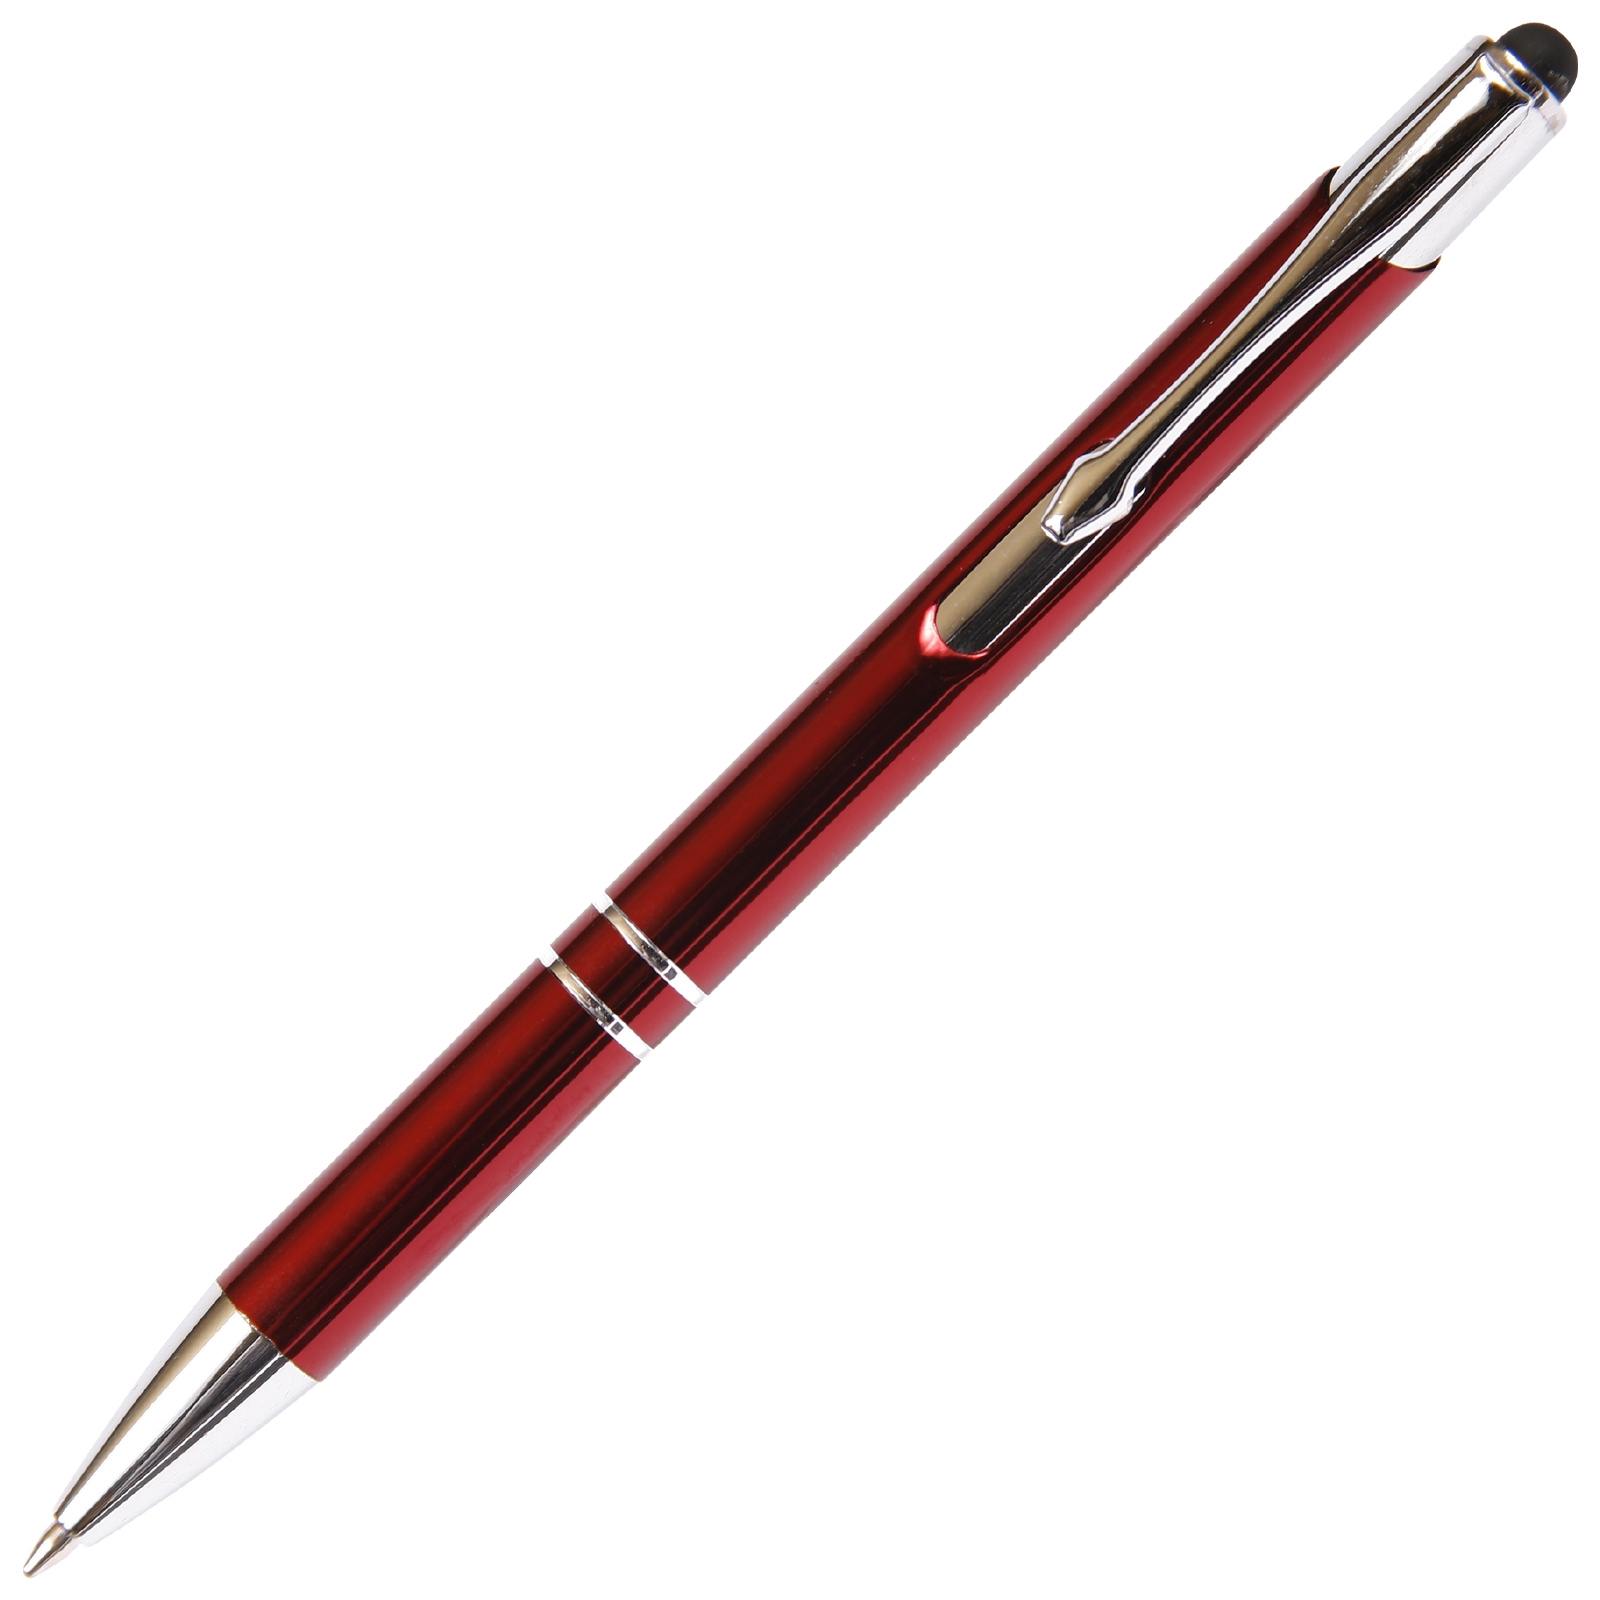 Budget Friendly JJ Ballpoint Pen with Stylus - Red By Lanier Pens